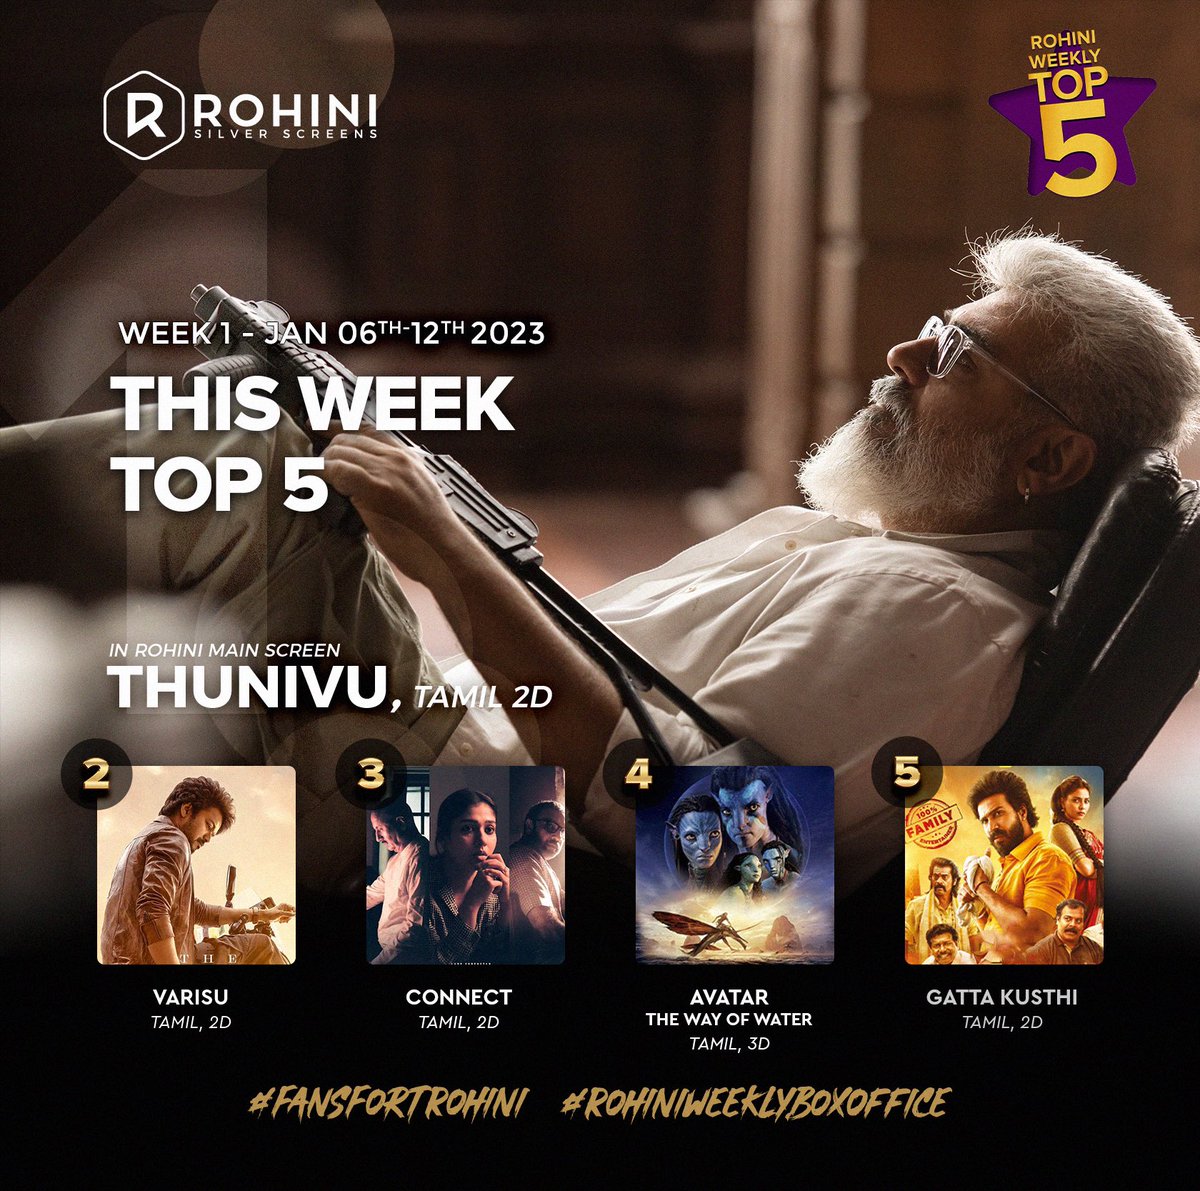 Week 1 of #RohiniWeeklyBoxOffice starts with #Thala starrer #Thunivu at No.1 and #Thalapathy starrer #Varisu at No.2

#Connect #Avatar 

Kuddos to @TheVishnuVishal @aishwaryaleksh7 starrer #GattaKusthi still in Top 5 even after OTT release. 

#FansFortRohini